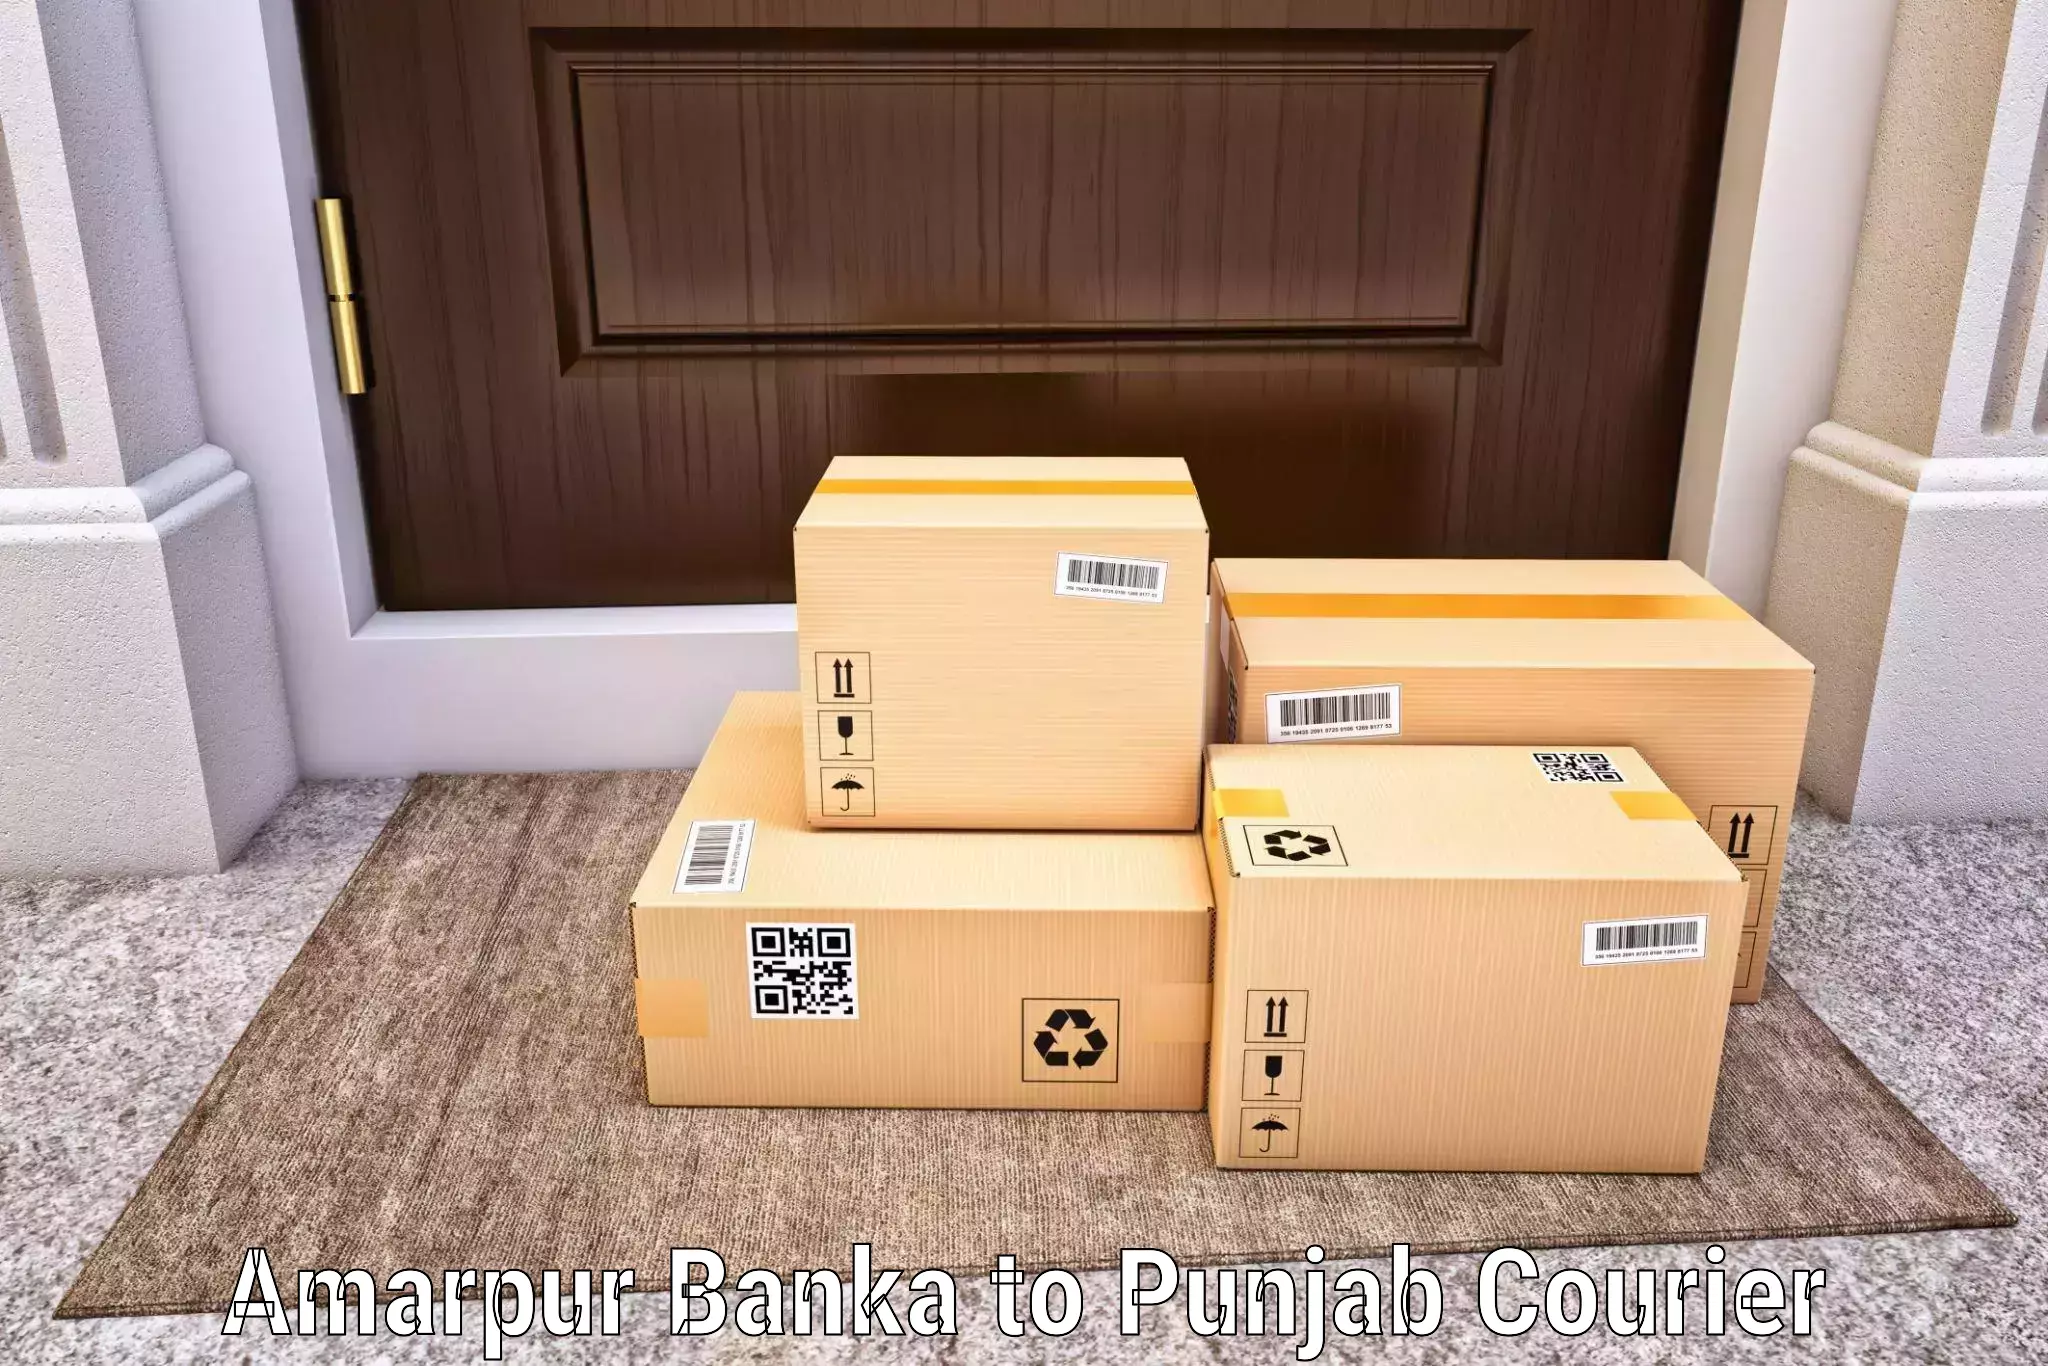 Global courier networks Amarpur Banka to Muktsar